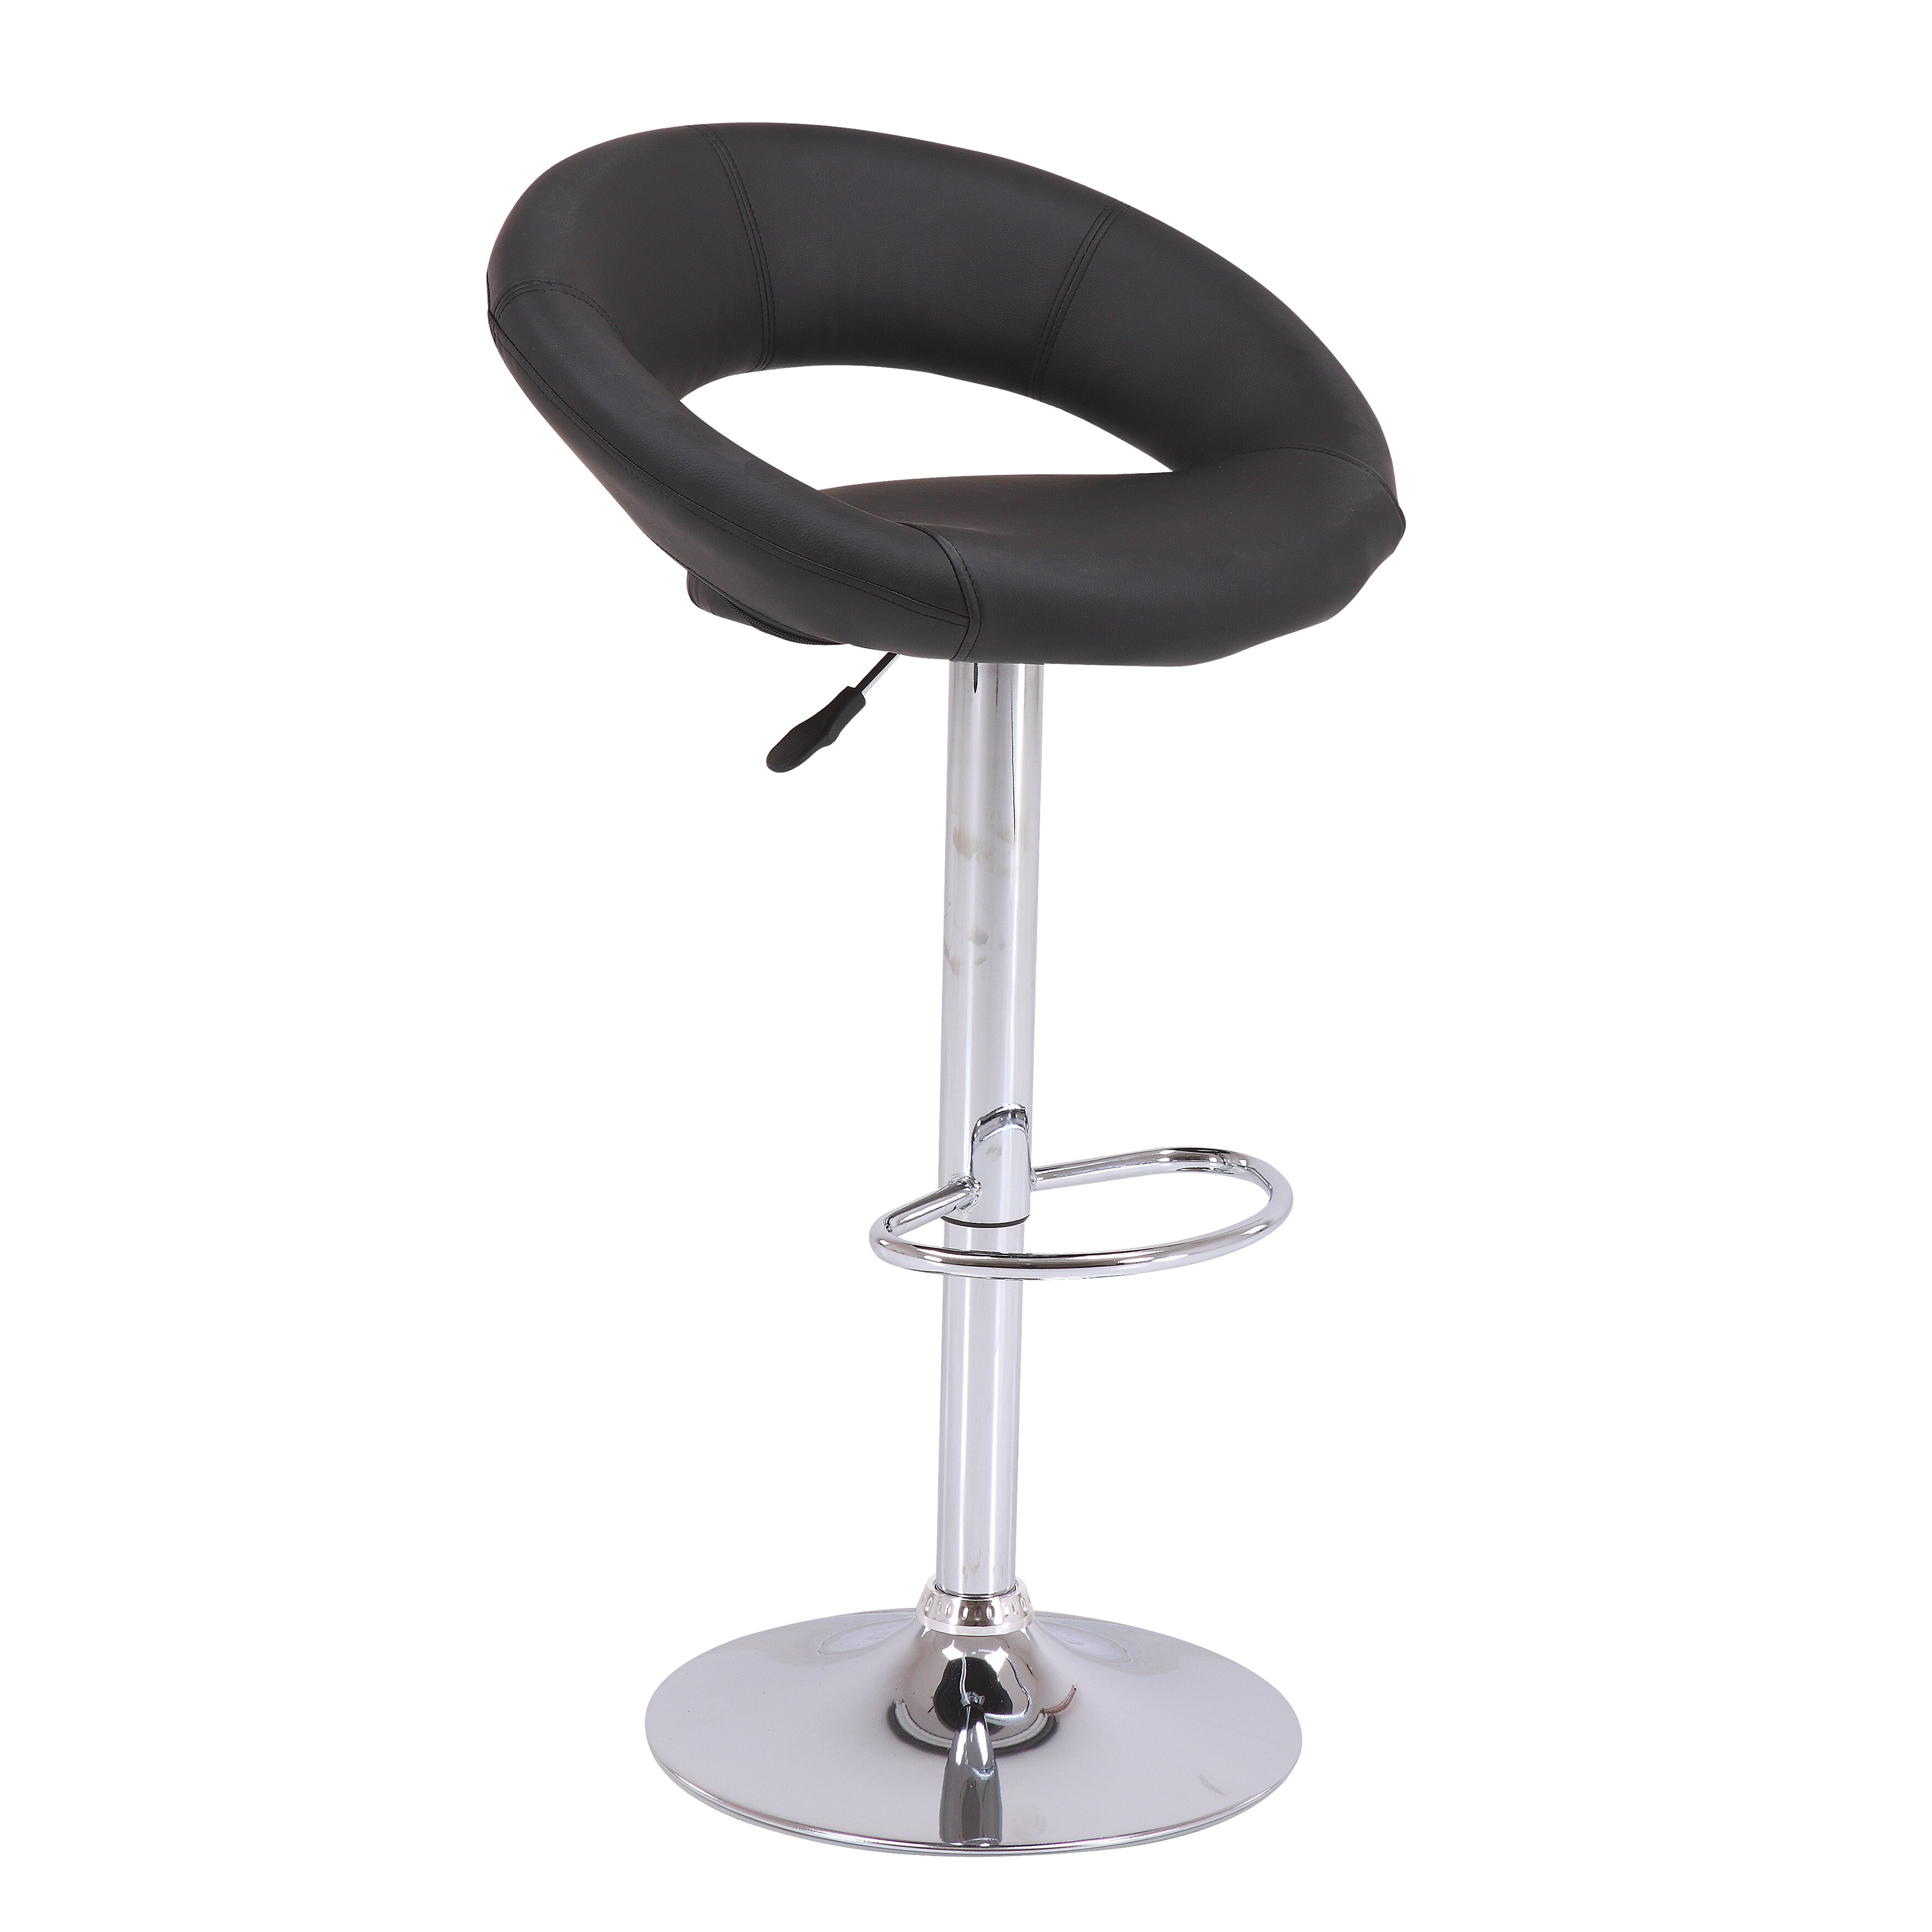 Black Vogue Furniture Direct Direct Adjustable Height Swivel Barstools With Footrest Set of 2 